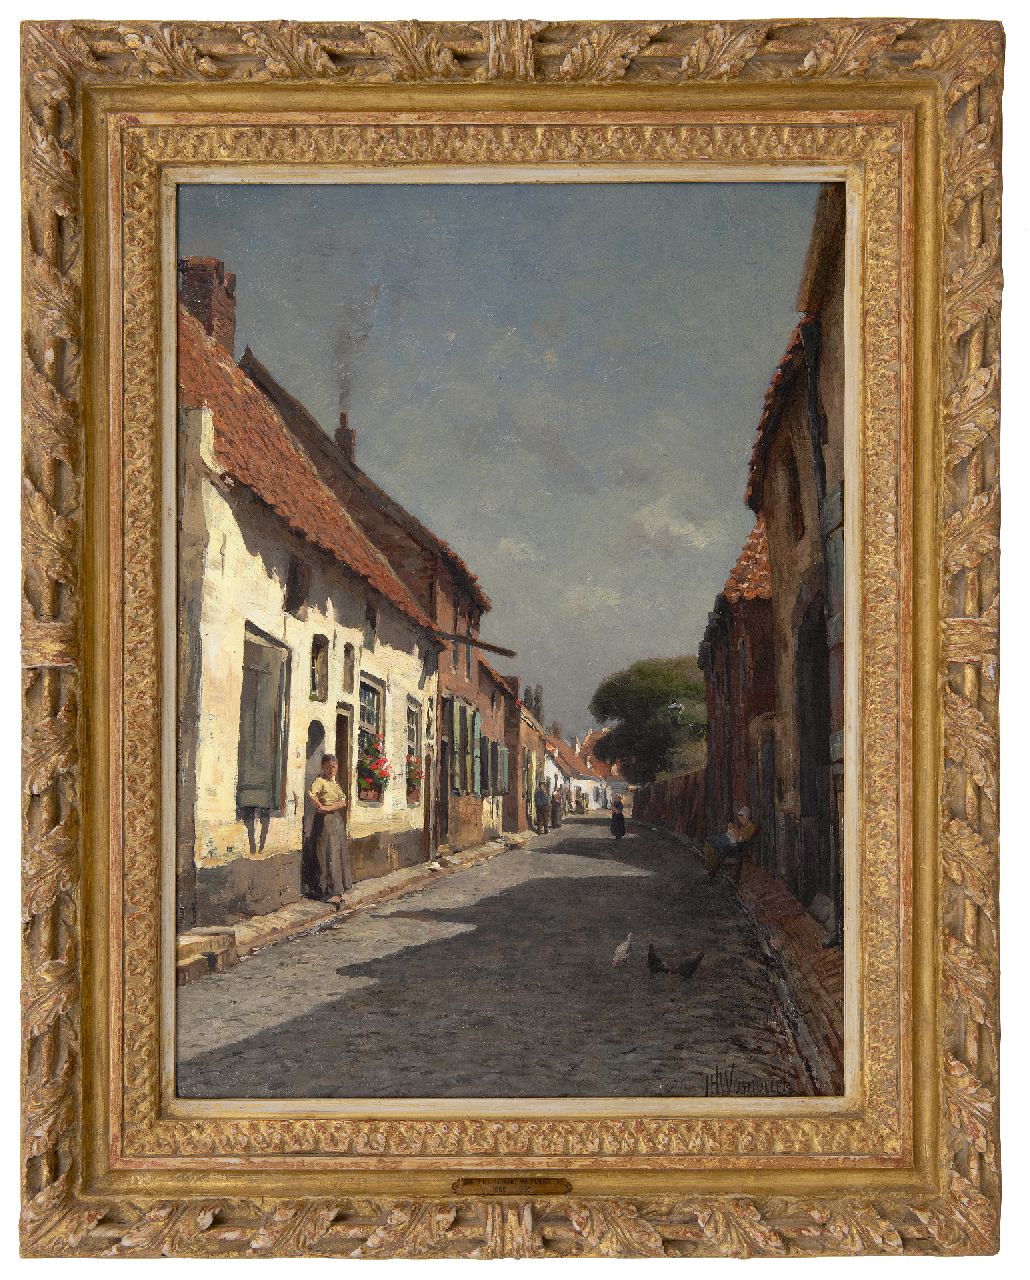 Wijsmuller J.H.  | Jan Hillebrand Wijsmuller | Paintings offered for sale | Sunny village street, oil on canvas 50.2 x 37.3 cm, signed l.r.